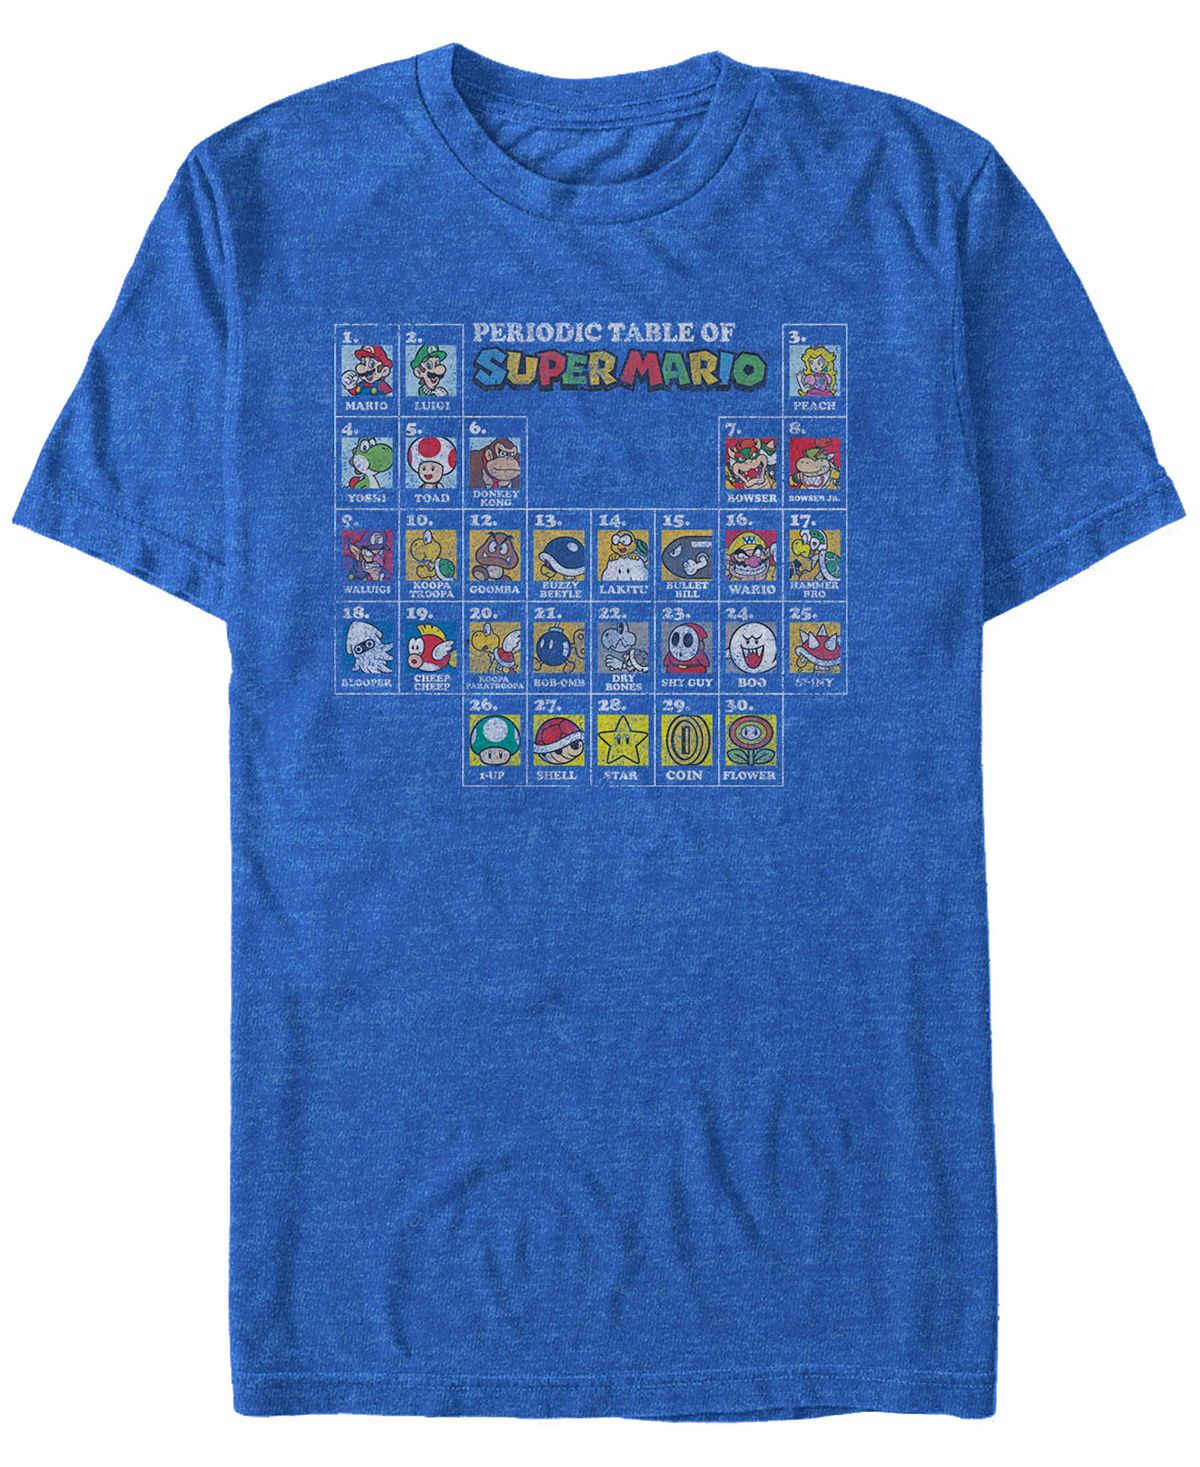 Мужская футболка Nintendo Super Mario The Super Periodic Table с короткими рукавами Fifth Sun